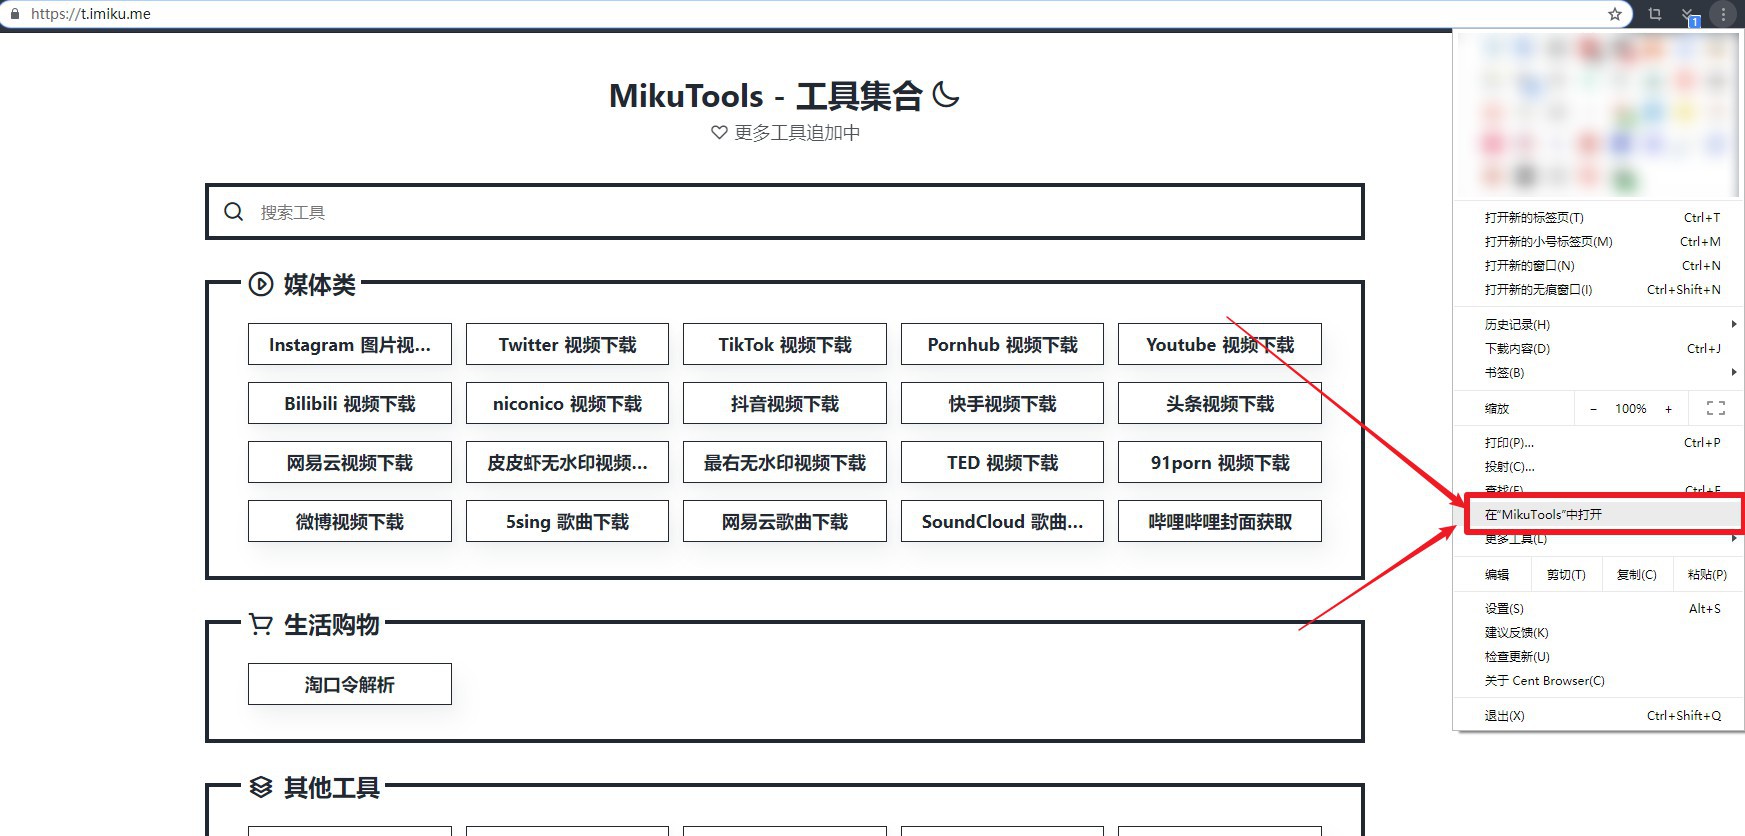 MikuTools - 一个轻量的工具合集